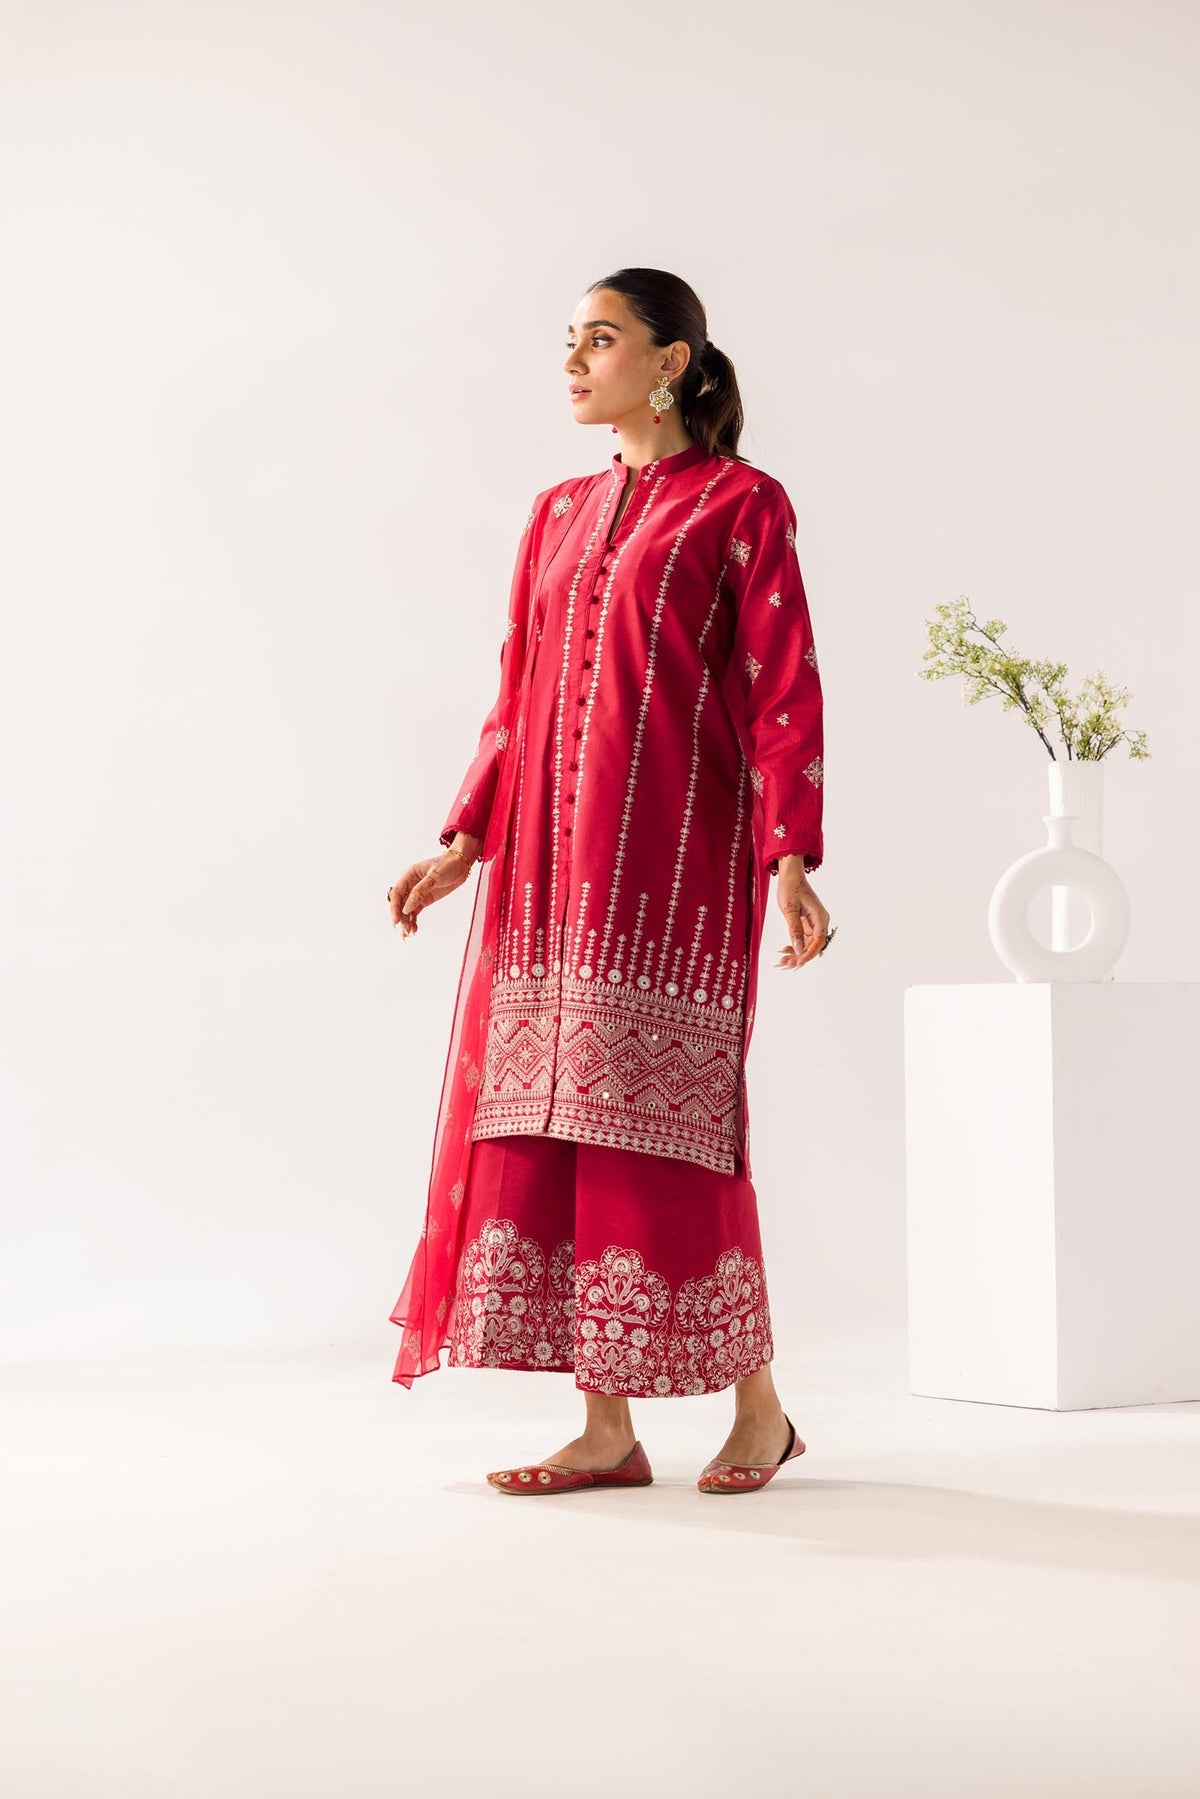 TaanaBaana | Signature Series | S3257A - Khanumjan  Pakistani Clothes and Designer Dresses in UK, USA 